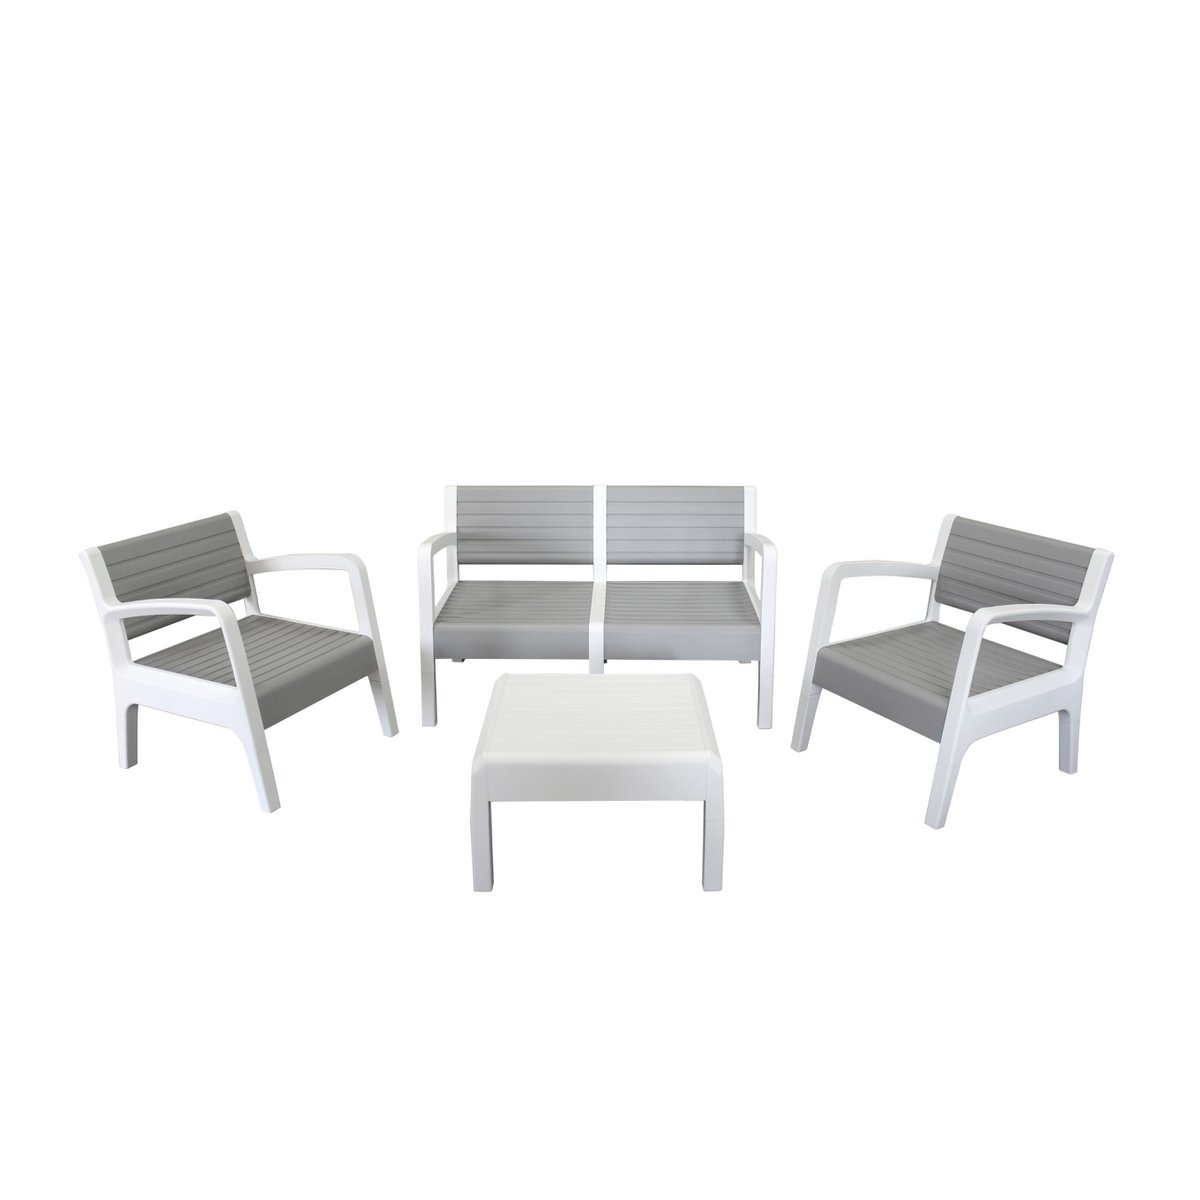 Garten Möbel Set Miami Weiss Grau Sessel Sofa Tisch Sitzgruppe Lounge